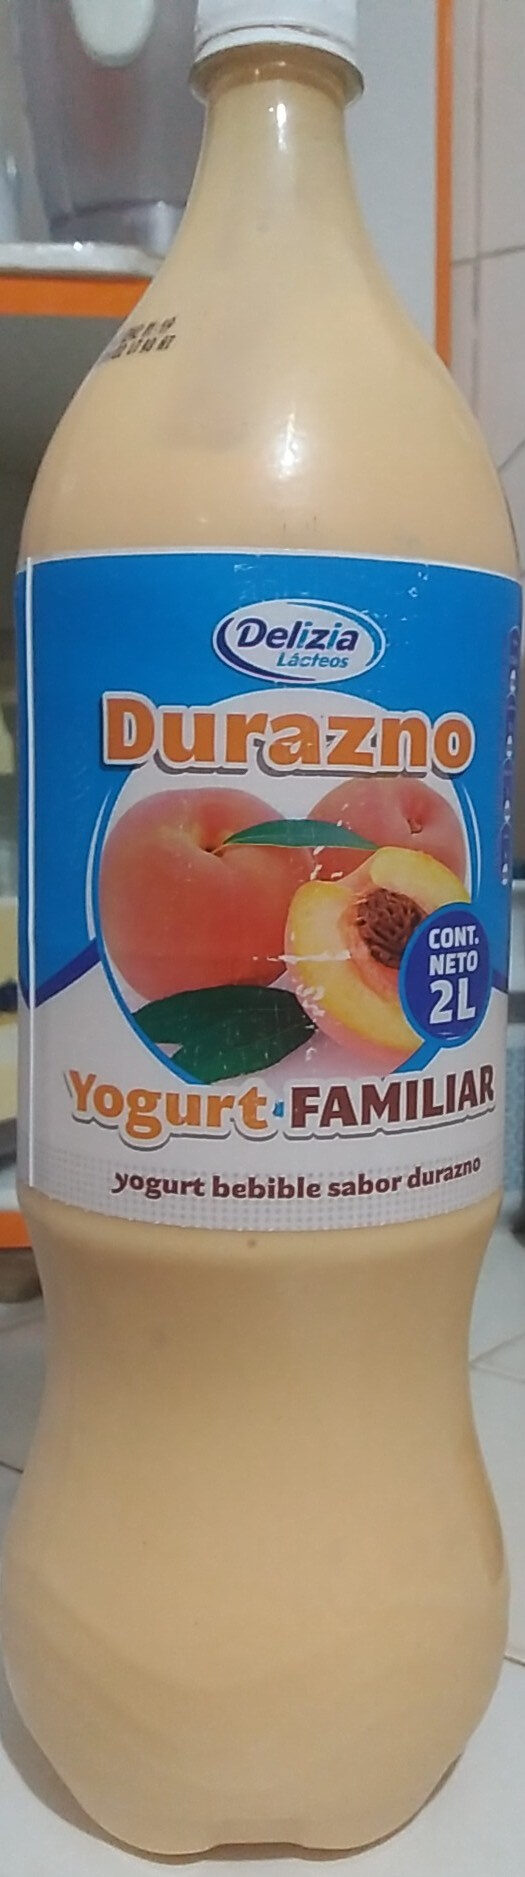 Yogurt Familiar Durazno - Product - es